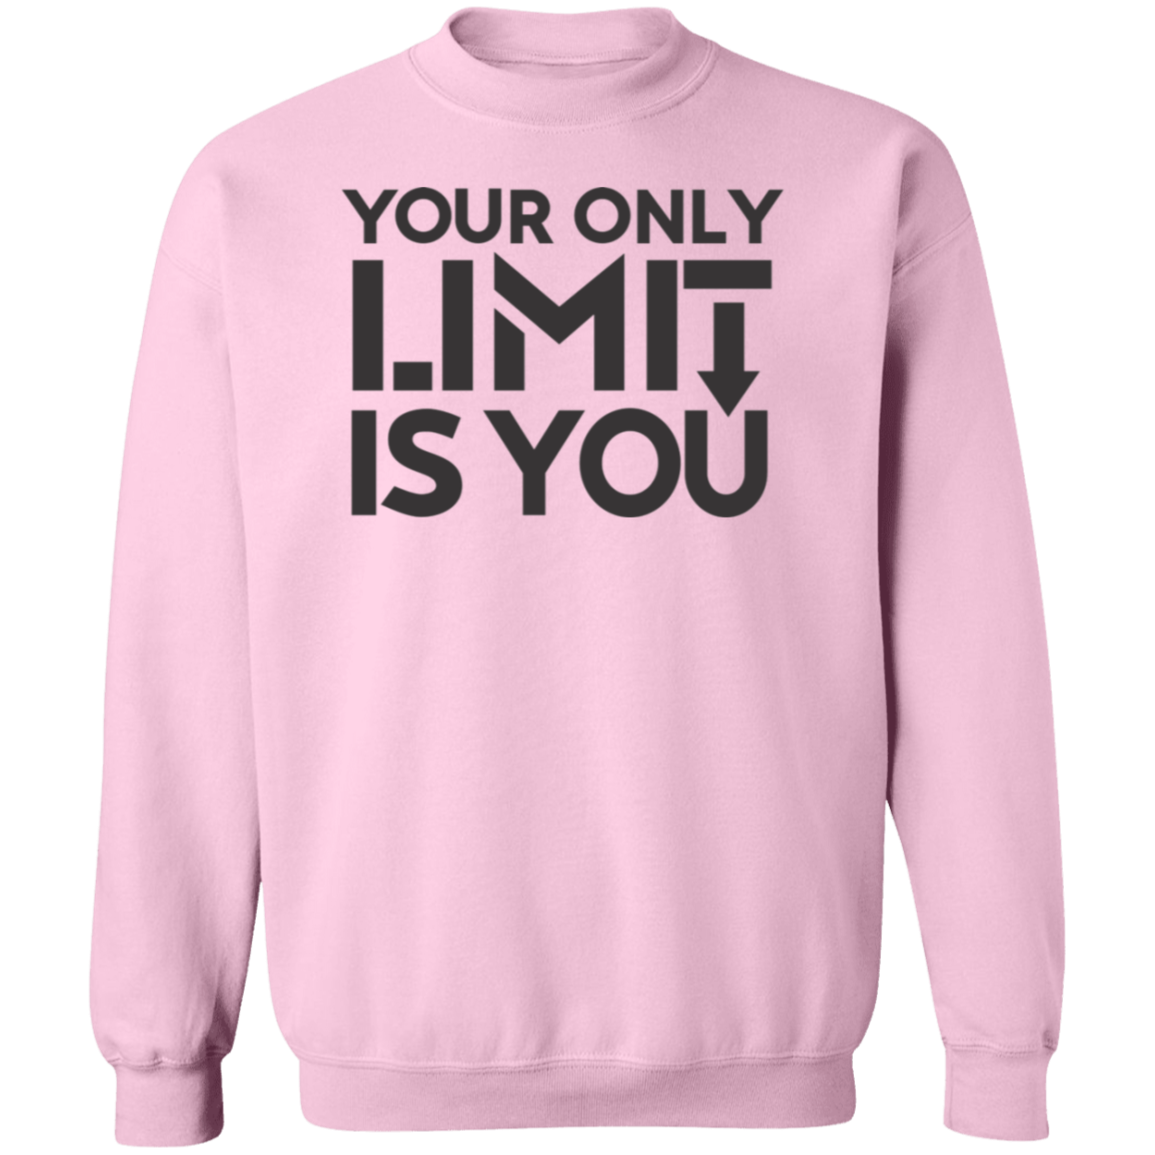 Your Only Limit is You Premium Crew Neck Sweatshirt